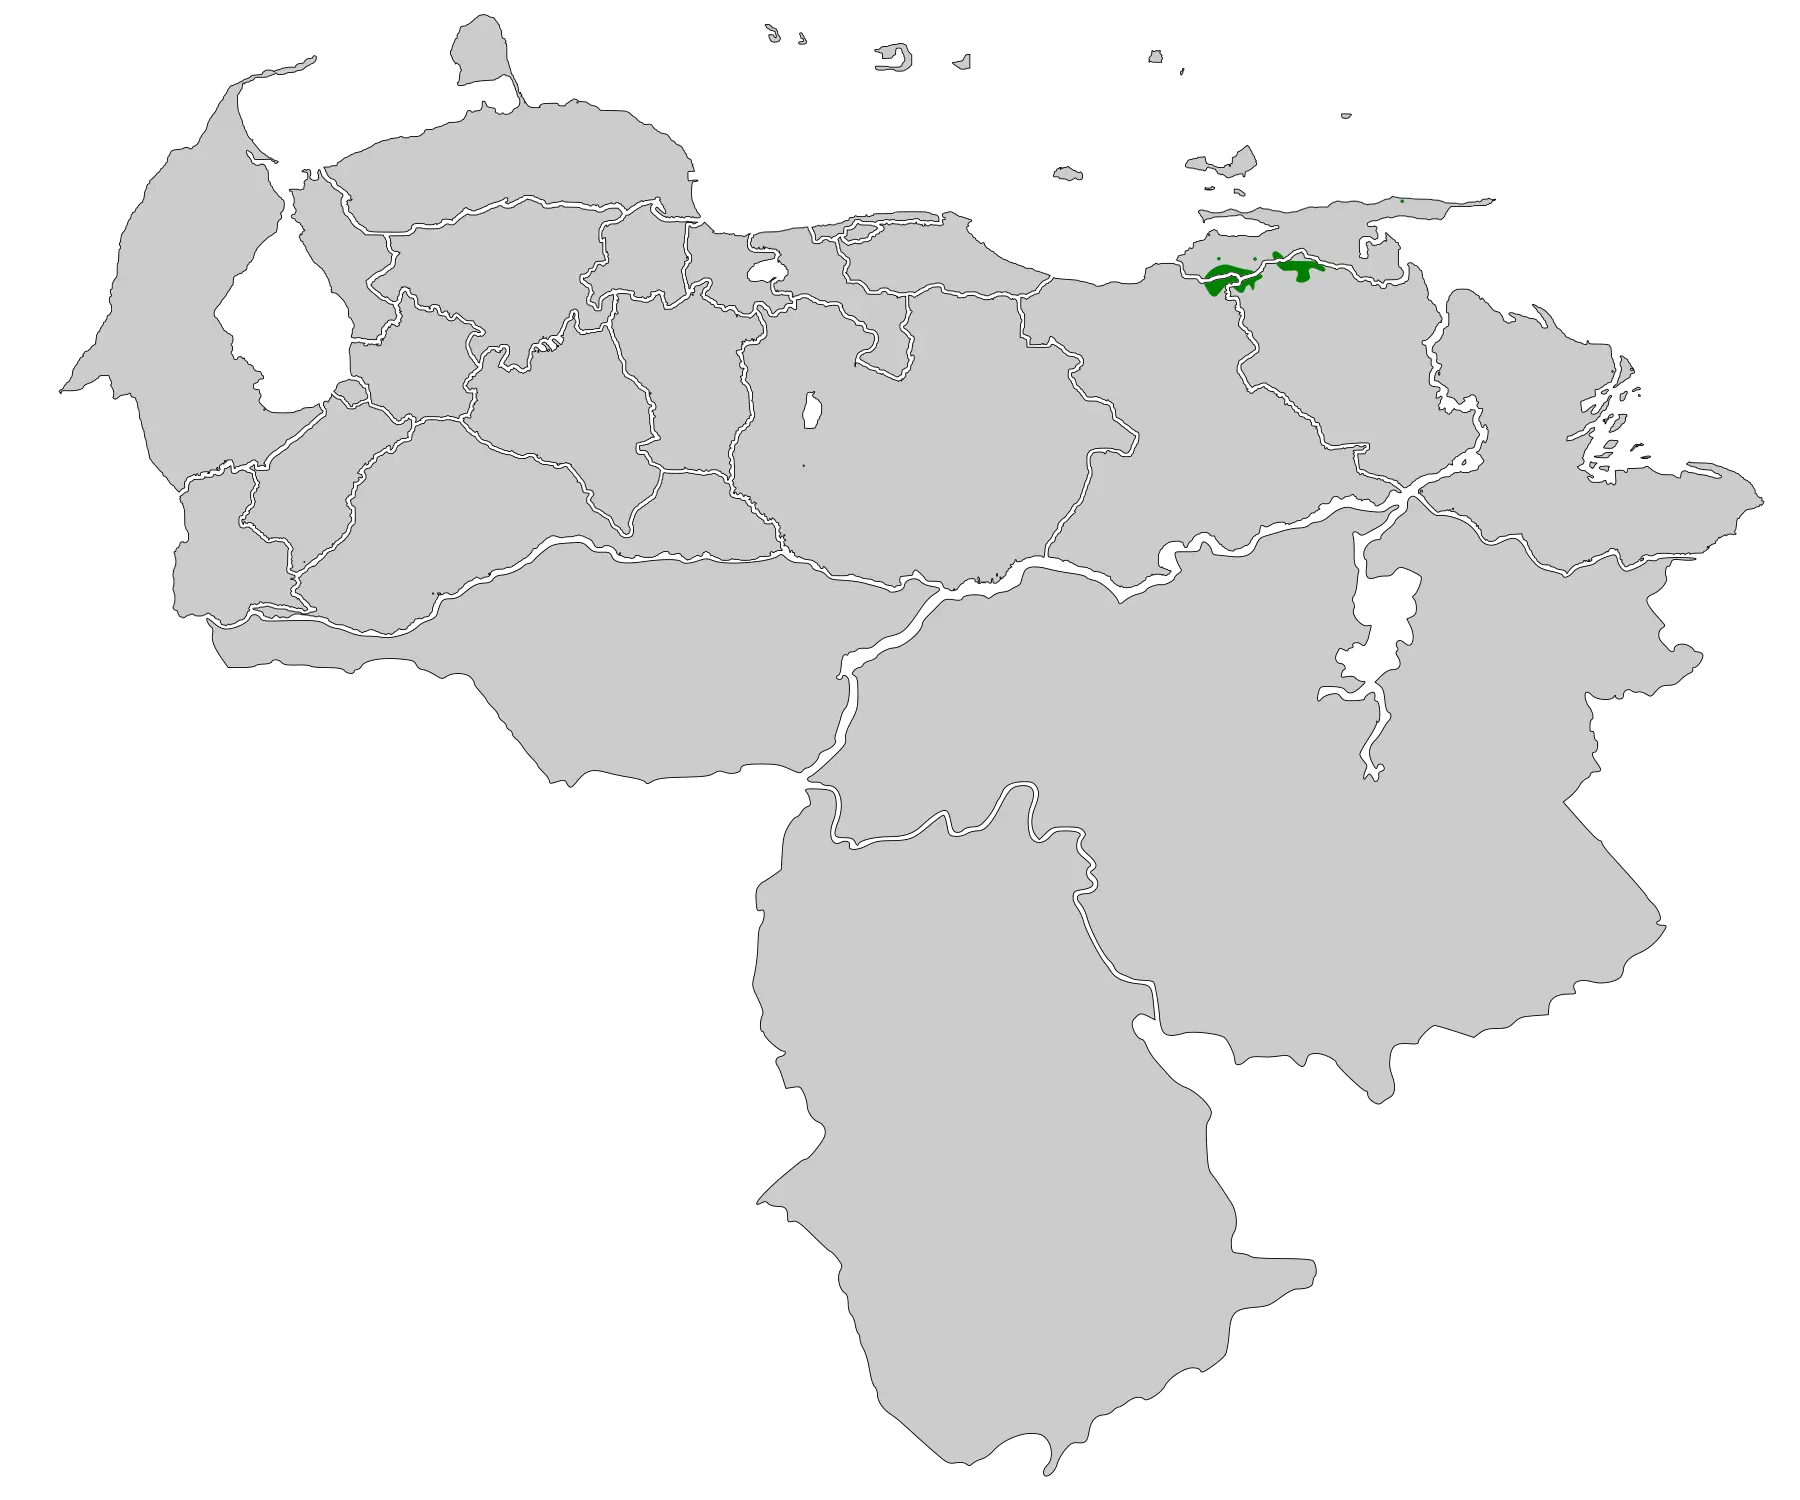 Venezuelan flowerpiercer habitat map